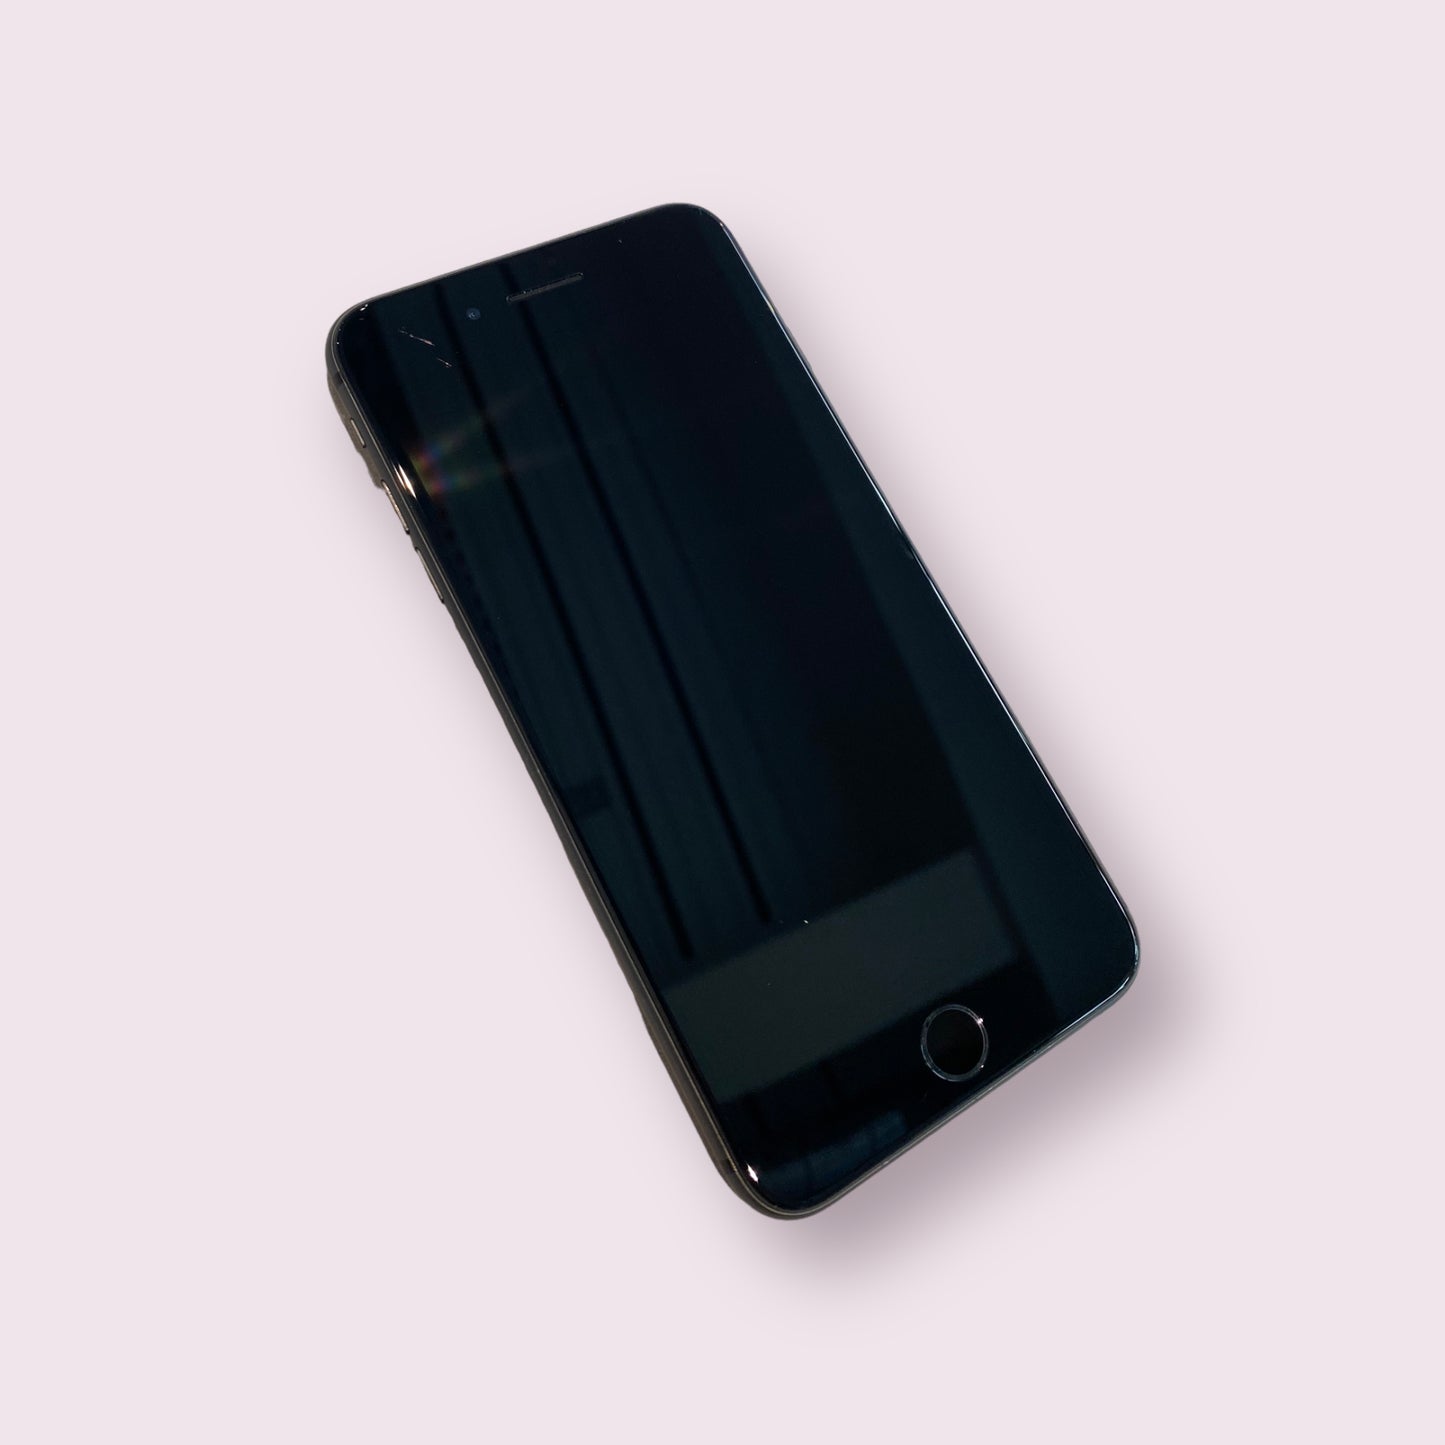 Apple iPhone 8 Plus 256GB Black Battery health 100%- unlocked - Grade A